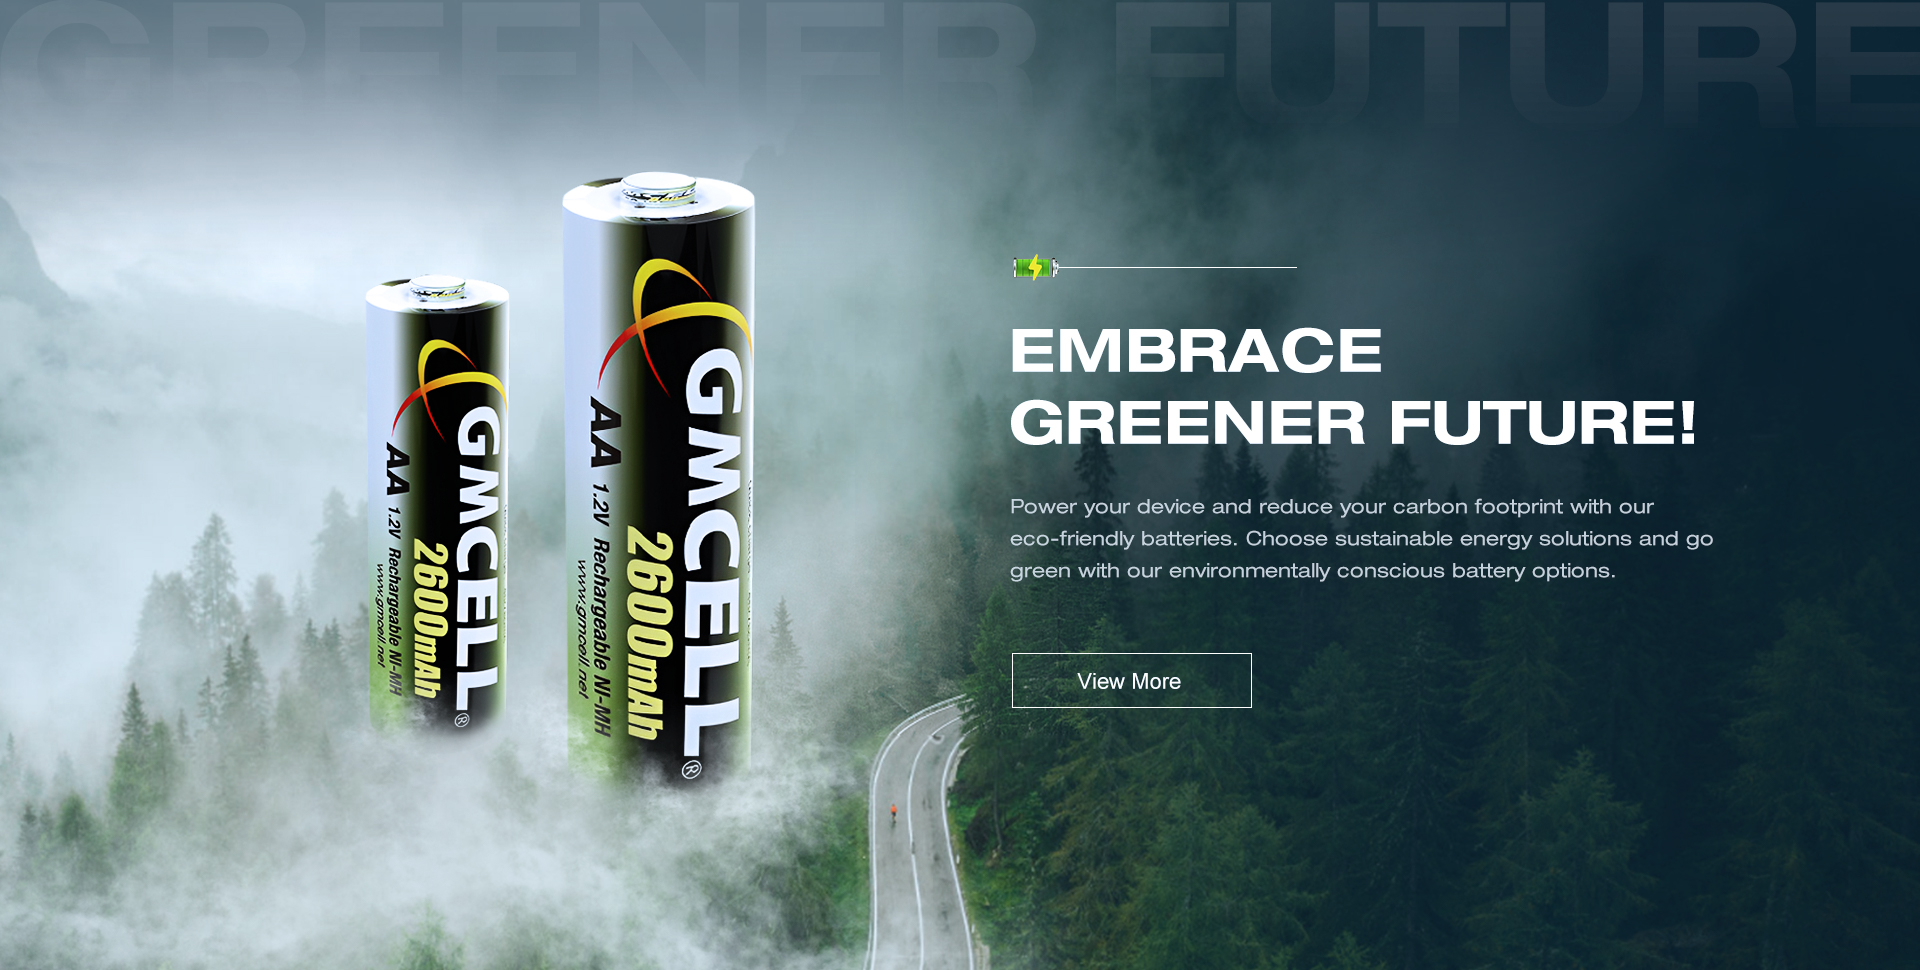 Eco-friendly batteries